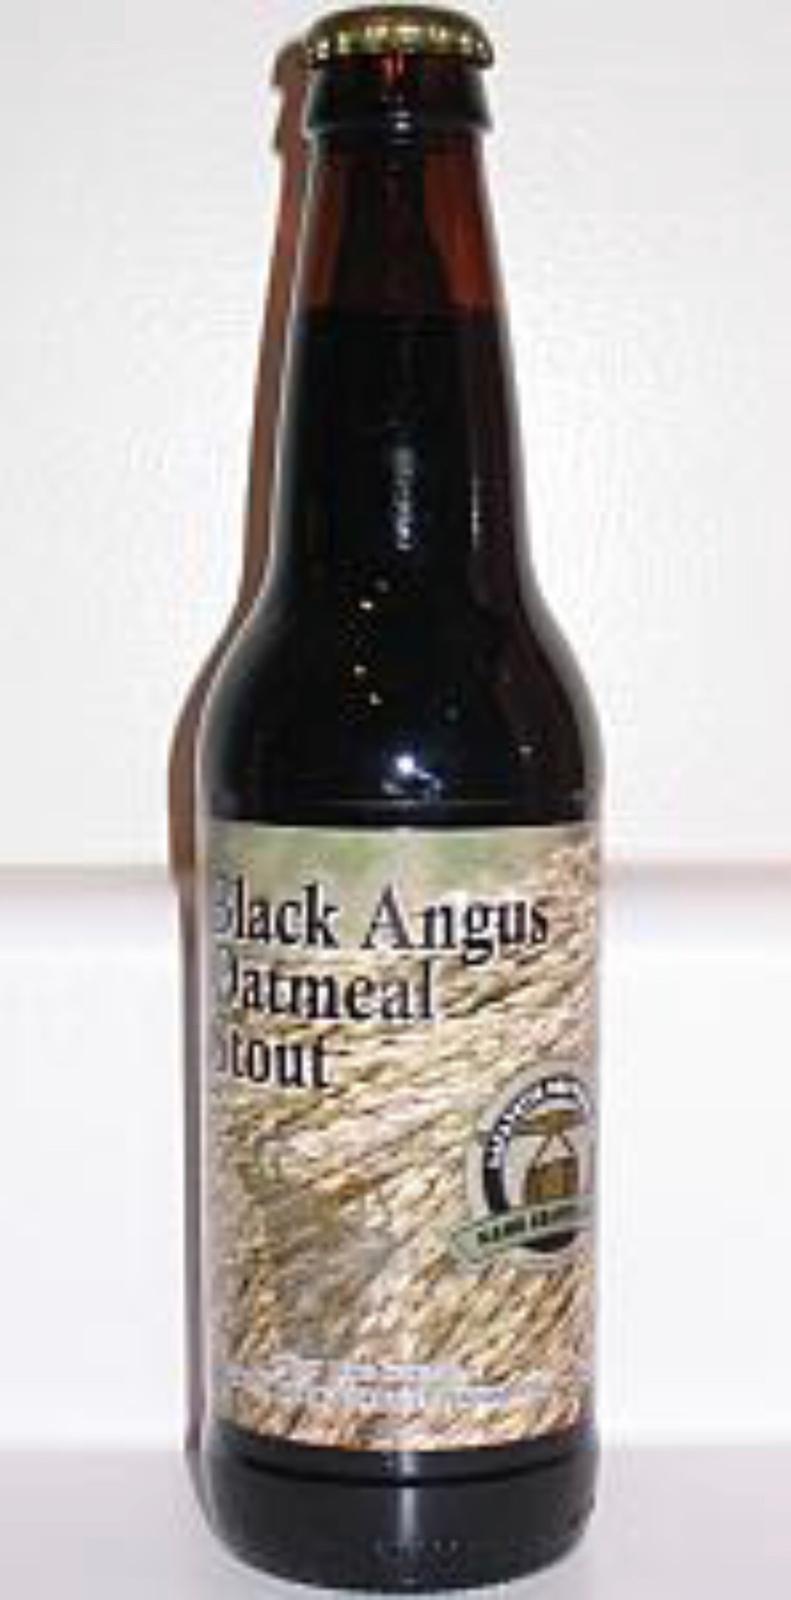 Black Angus Oatmeal Stout